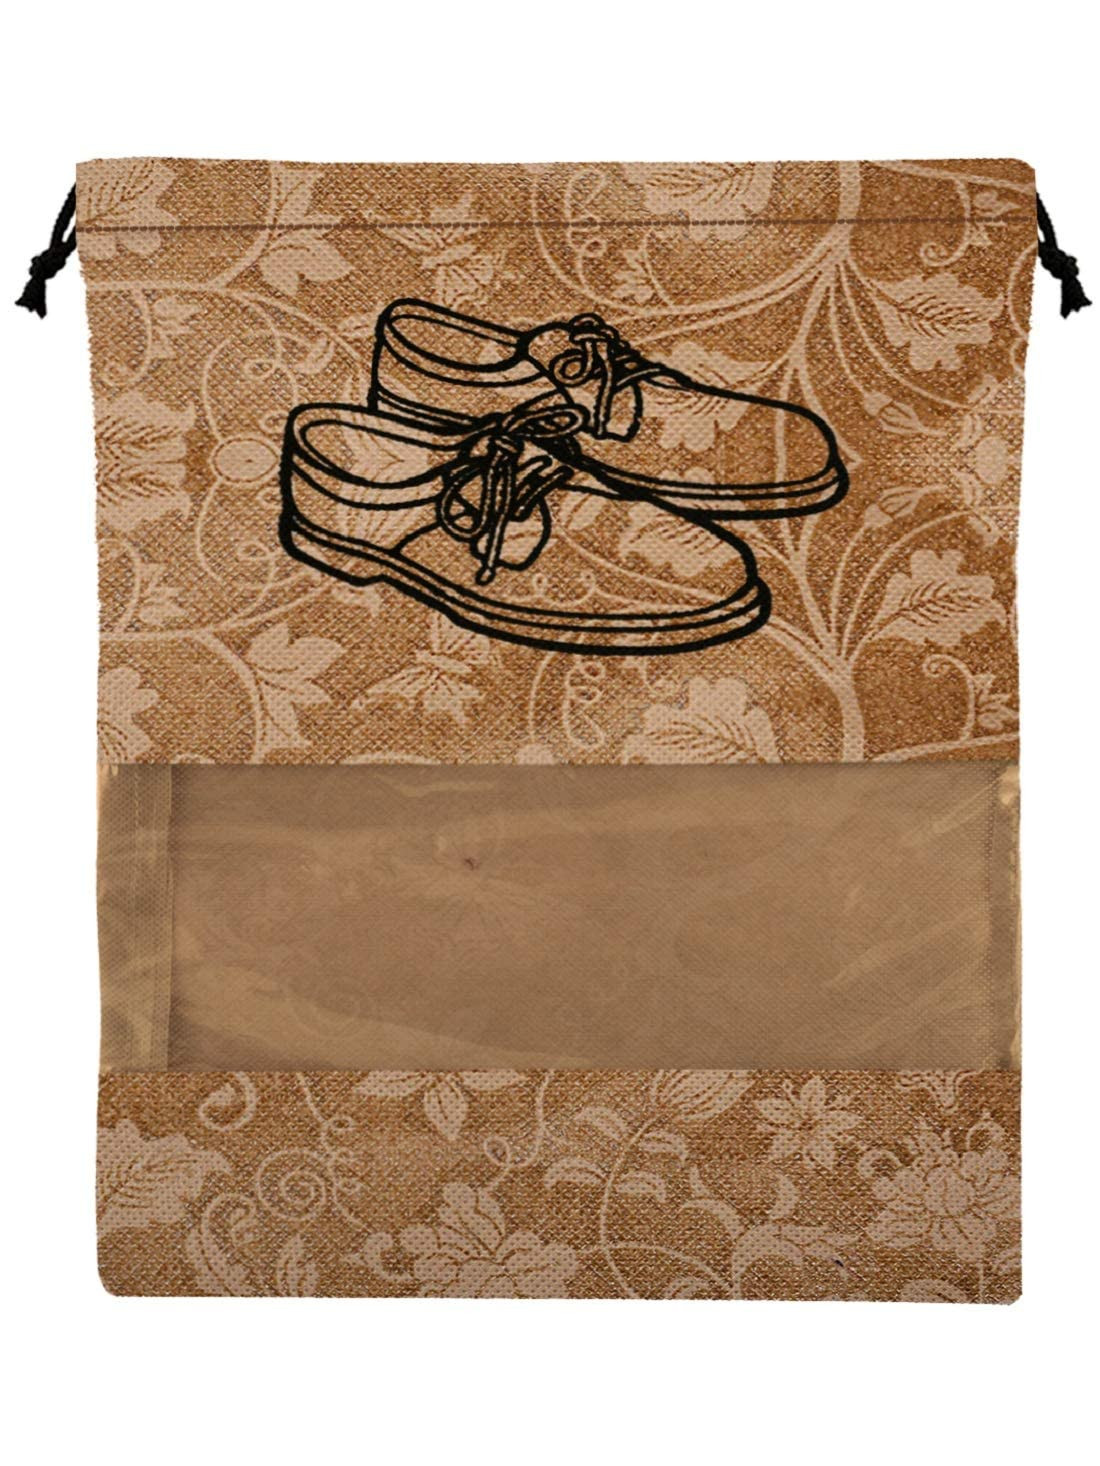 Buy JEH BAGS Cotton Folding Travelling Bag - Sticker Printed Shoe/Slipper  bag Eco Friendly reusable Handbag Capacity-25 LTR. 47.5 x 22 x 28 cm-  Multicolor 1 Pcs. at Amazon.in